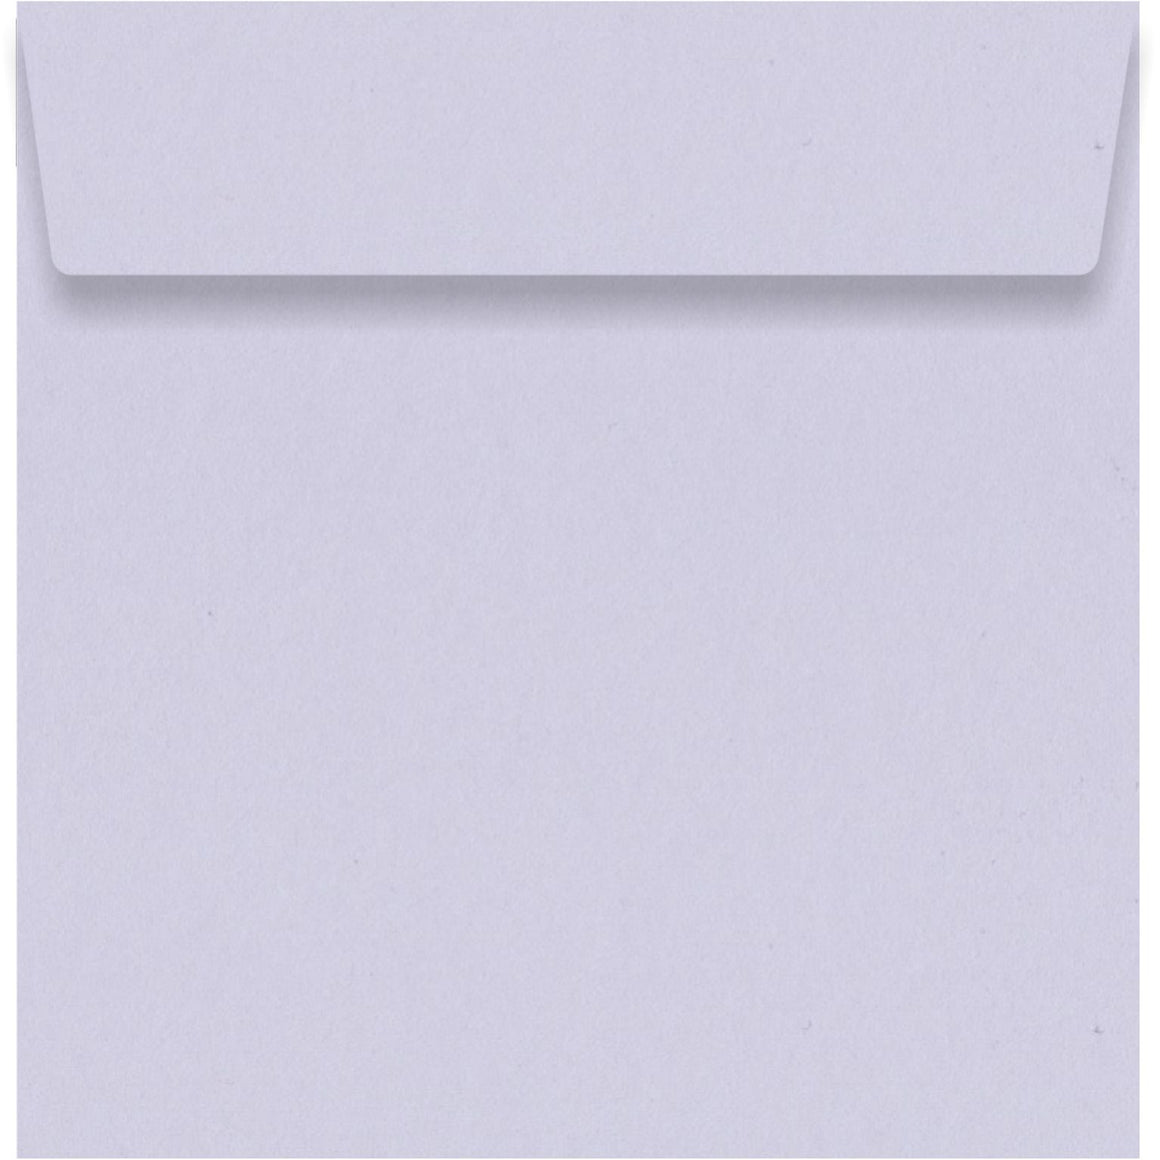 Skylark Violet 130 x 130mm Envelope